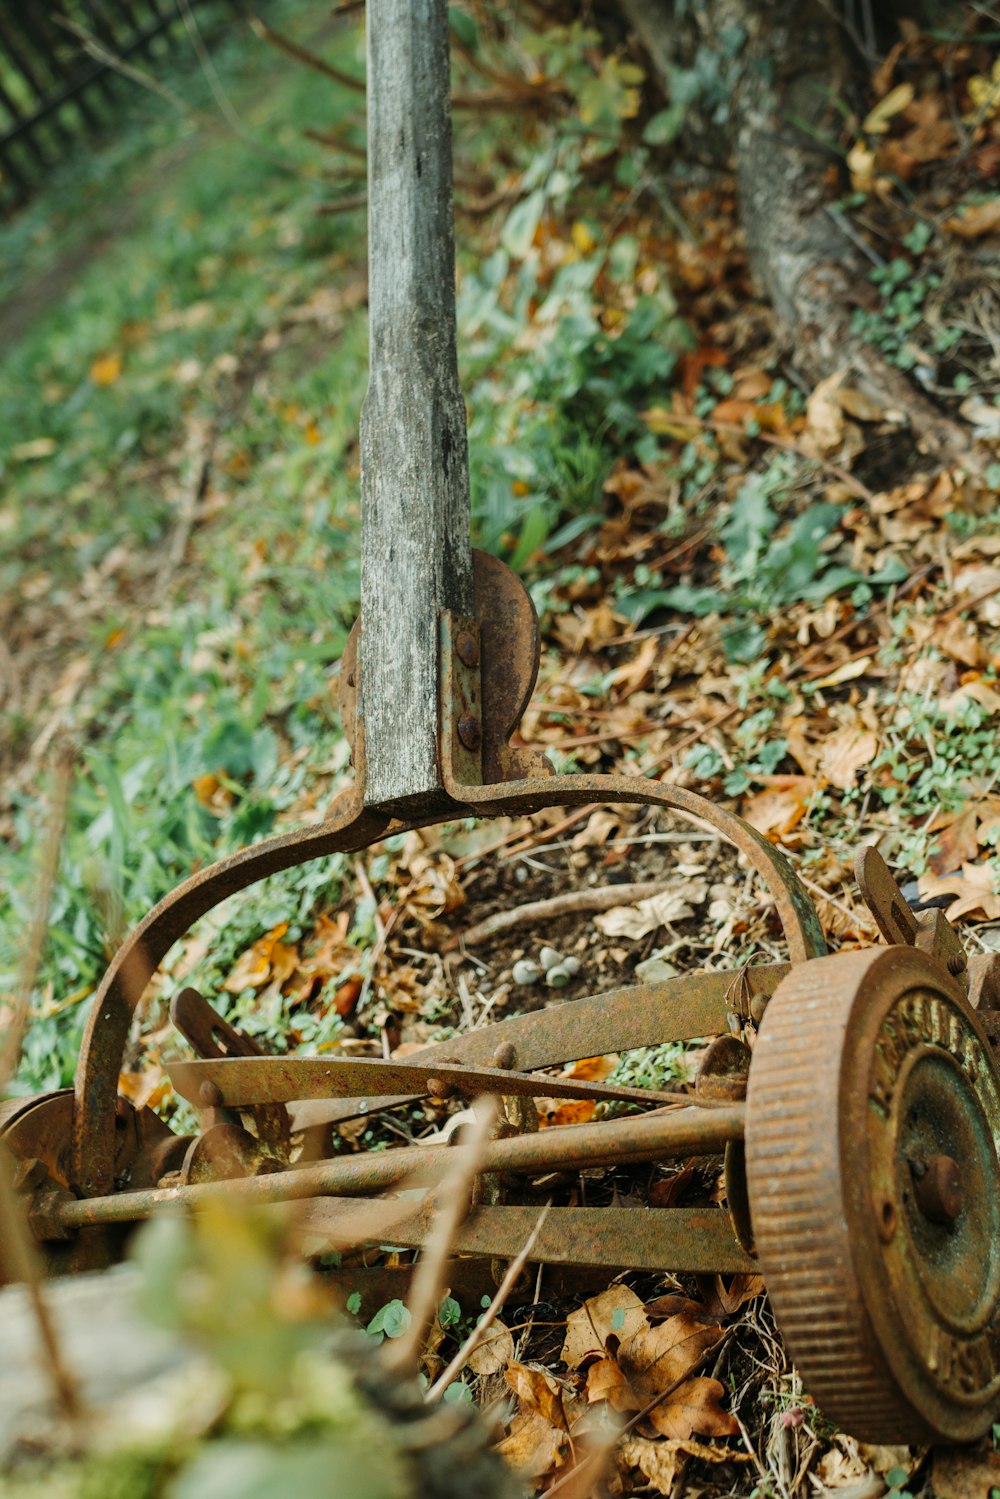 Brown metal reel mower close-up photography photo – Free Leaf Image on  Unsplash